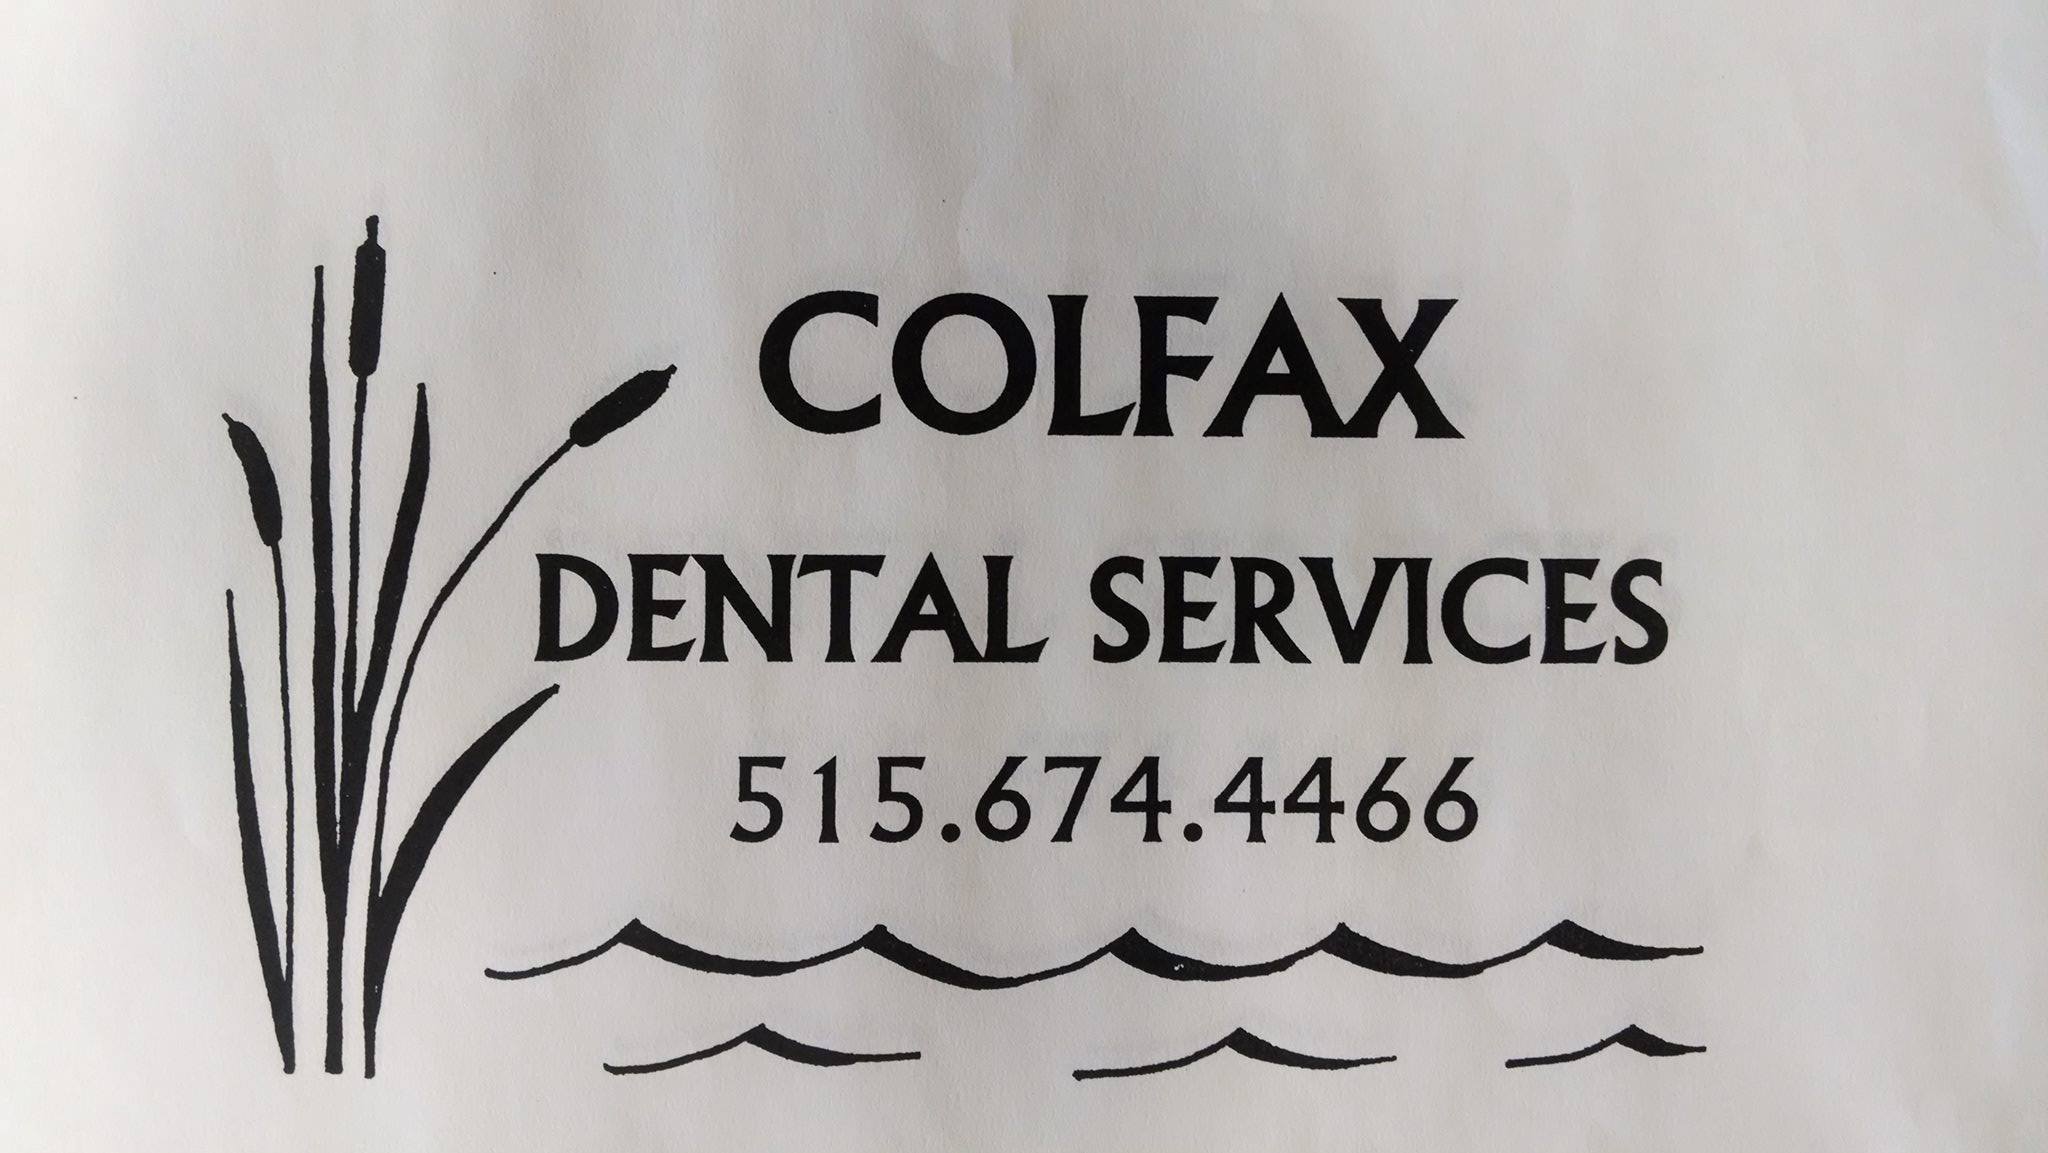 Colfax Dental Services's Image